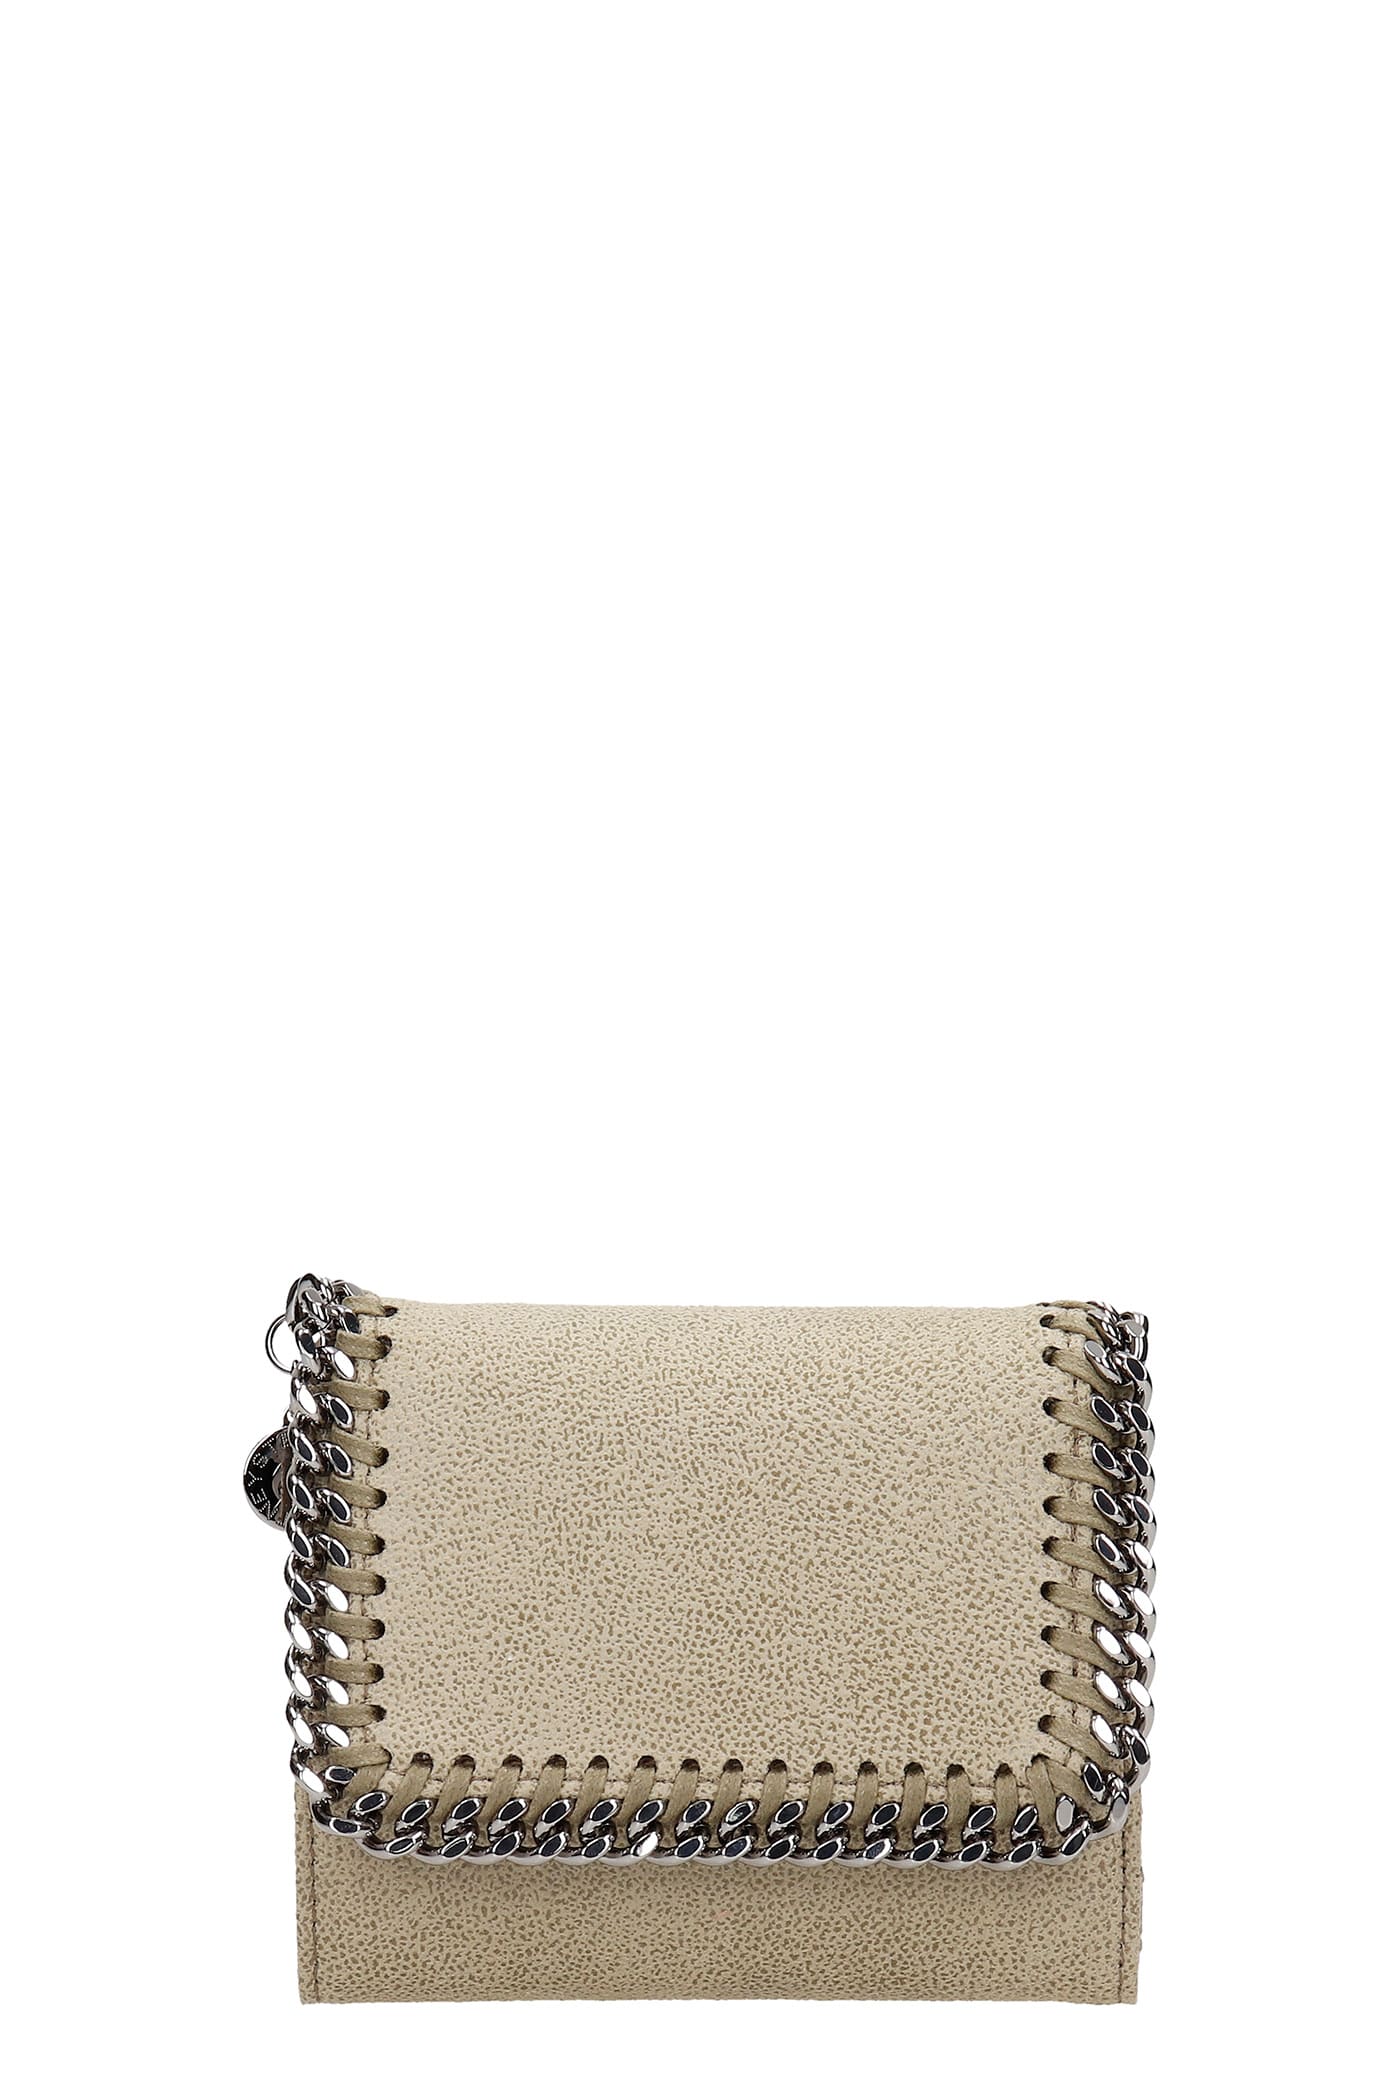 Stella McCartney Falabella Wallet In Khaki Faux Leather